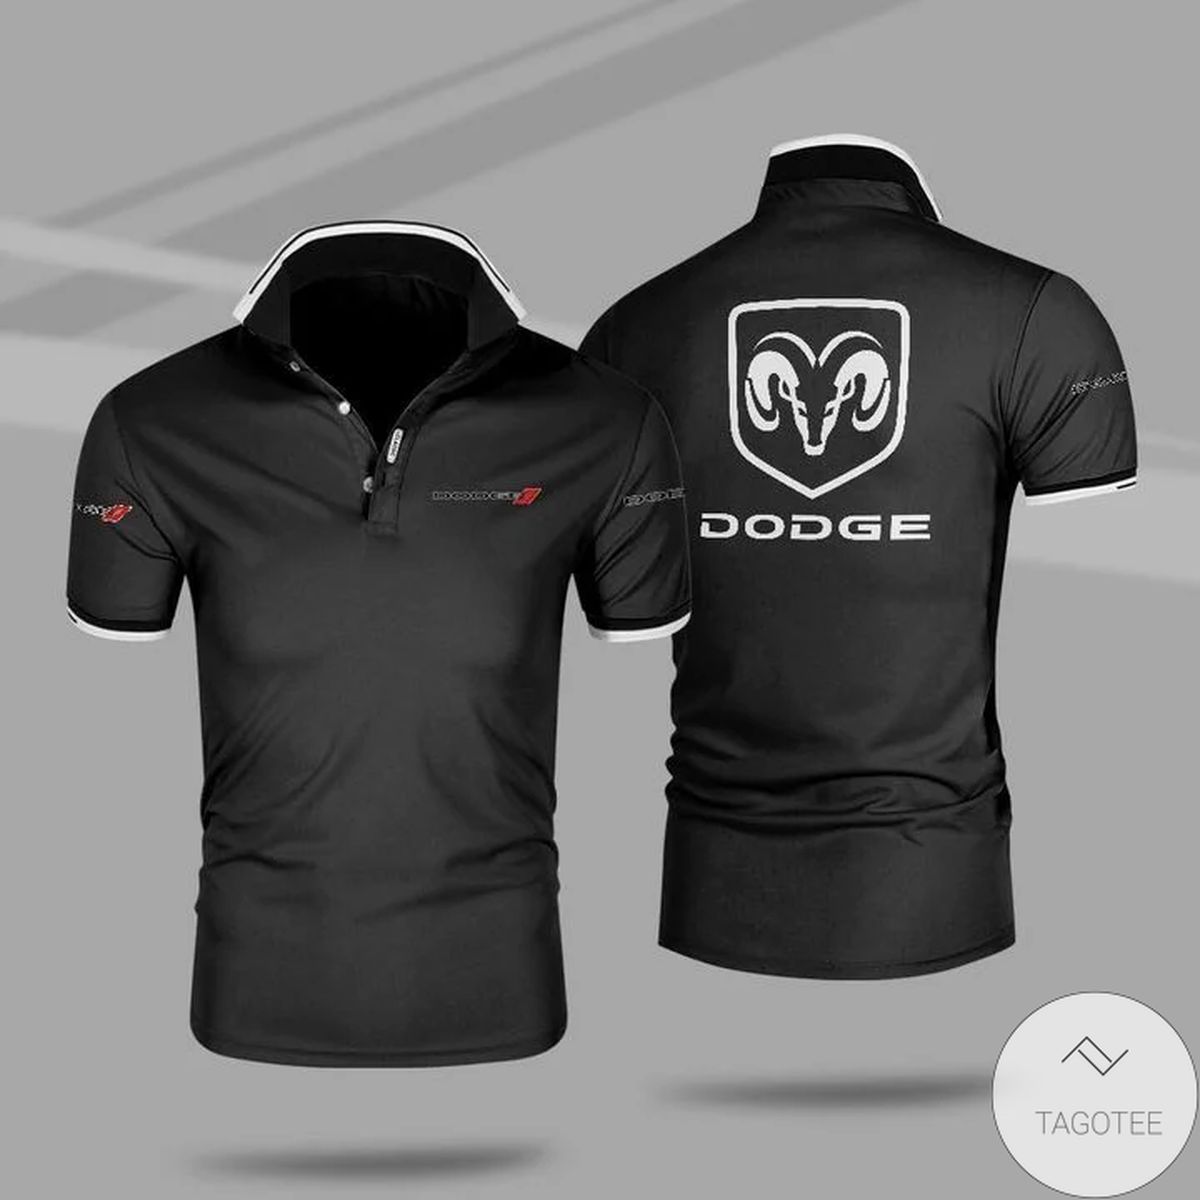 Dodge Polo Shirt